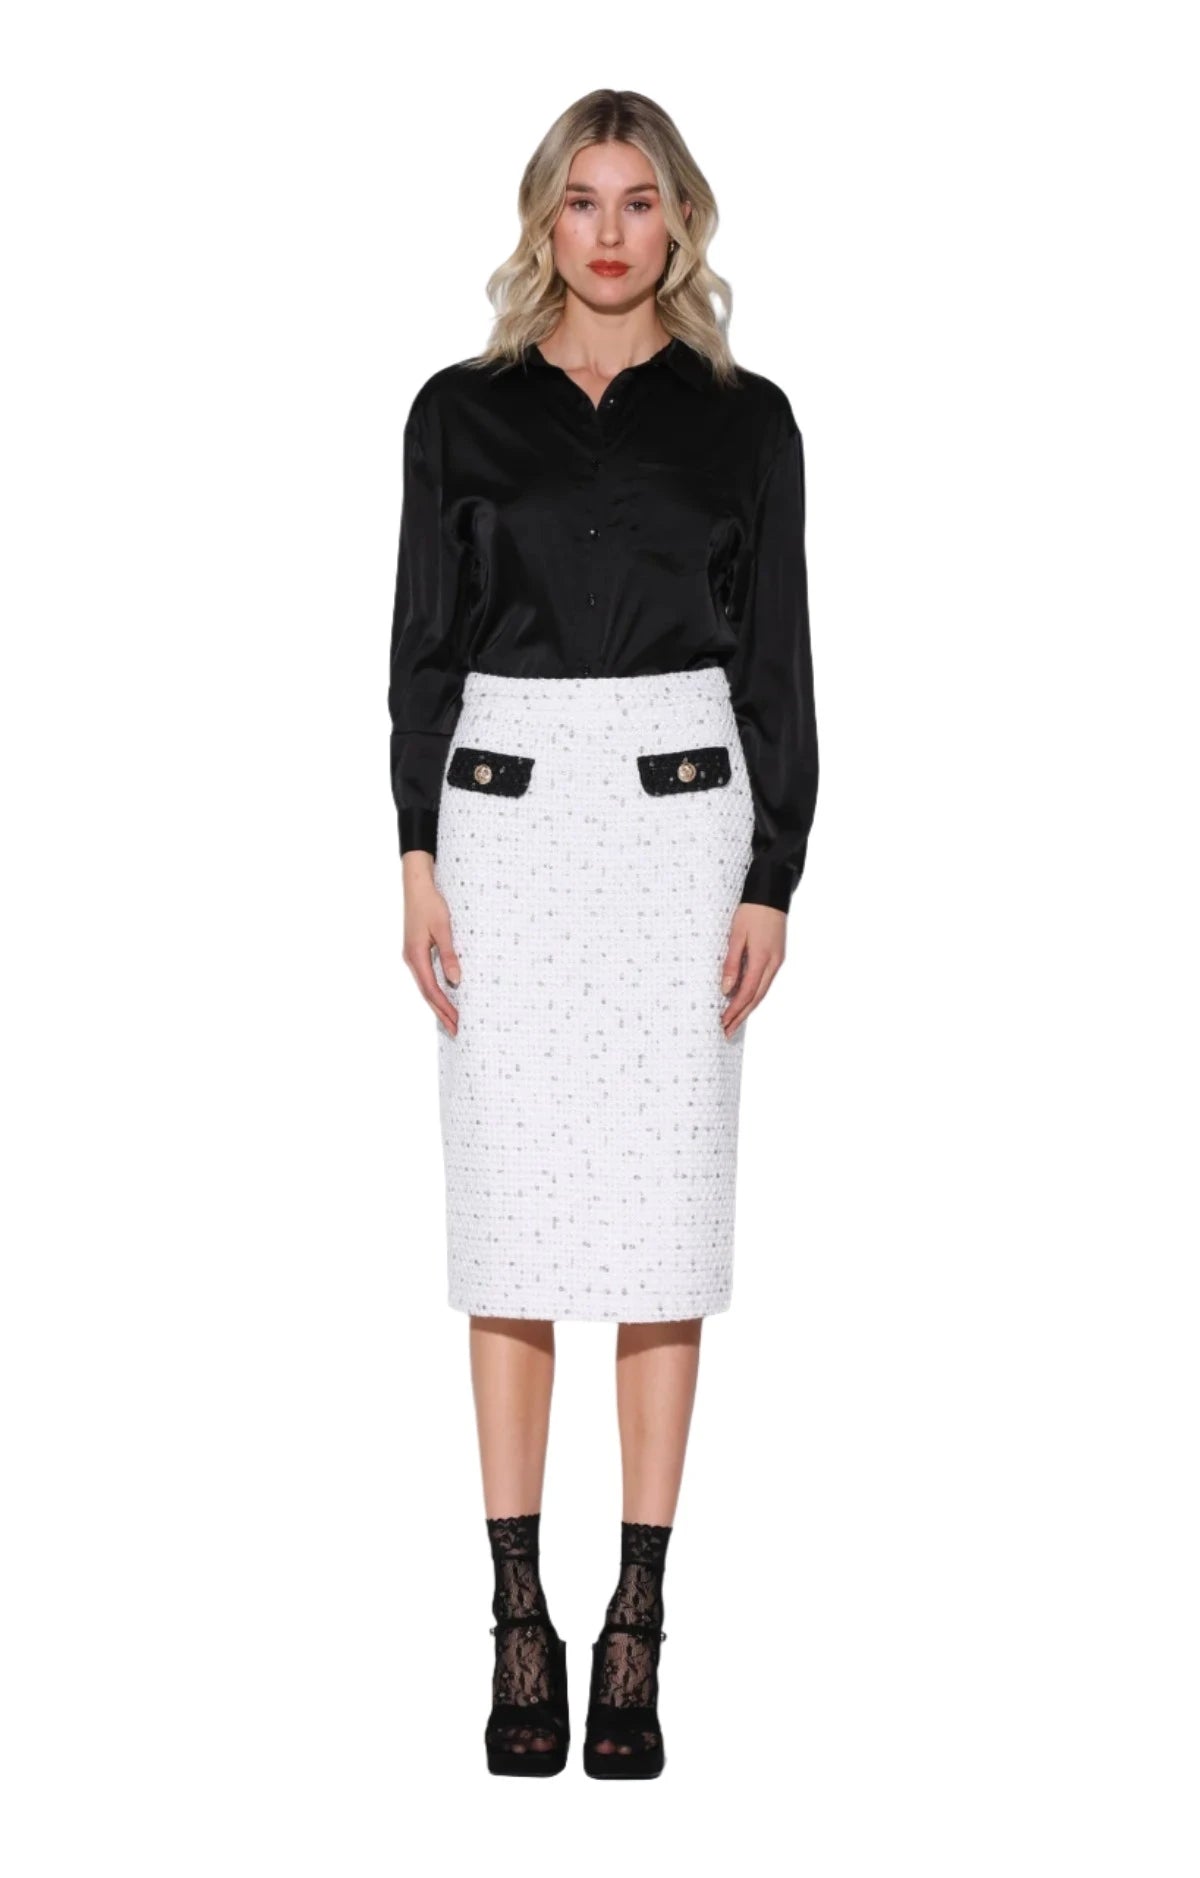 Walter Baker Melany Skirt Parisian Tweed in White and Black